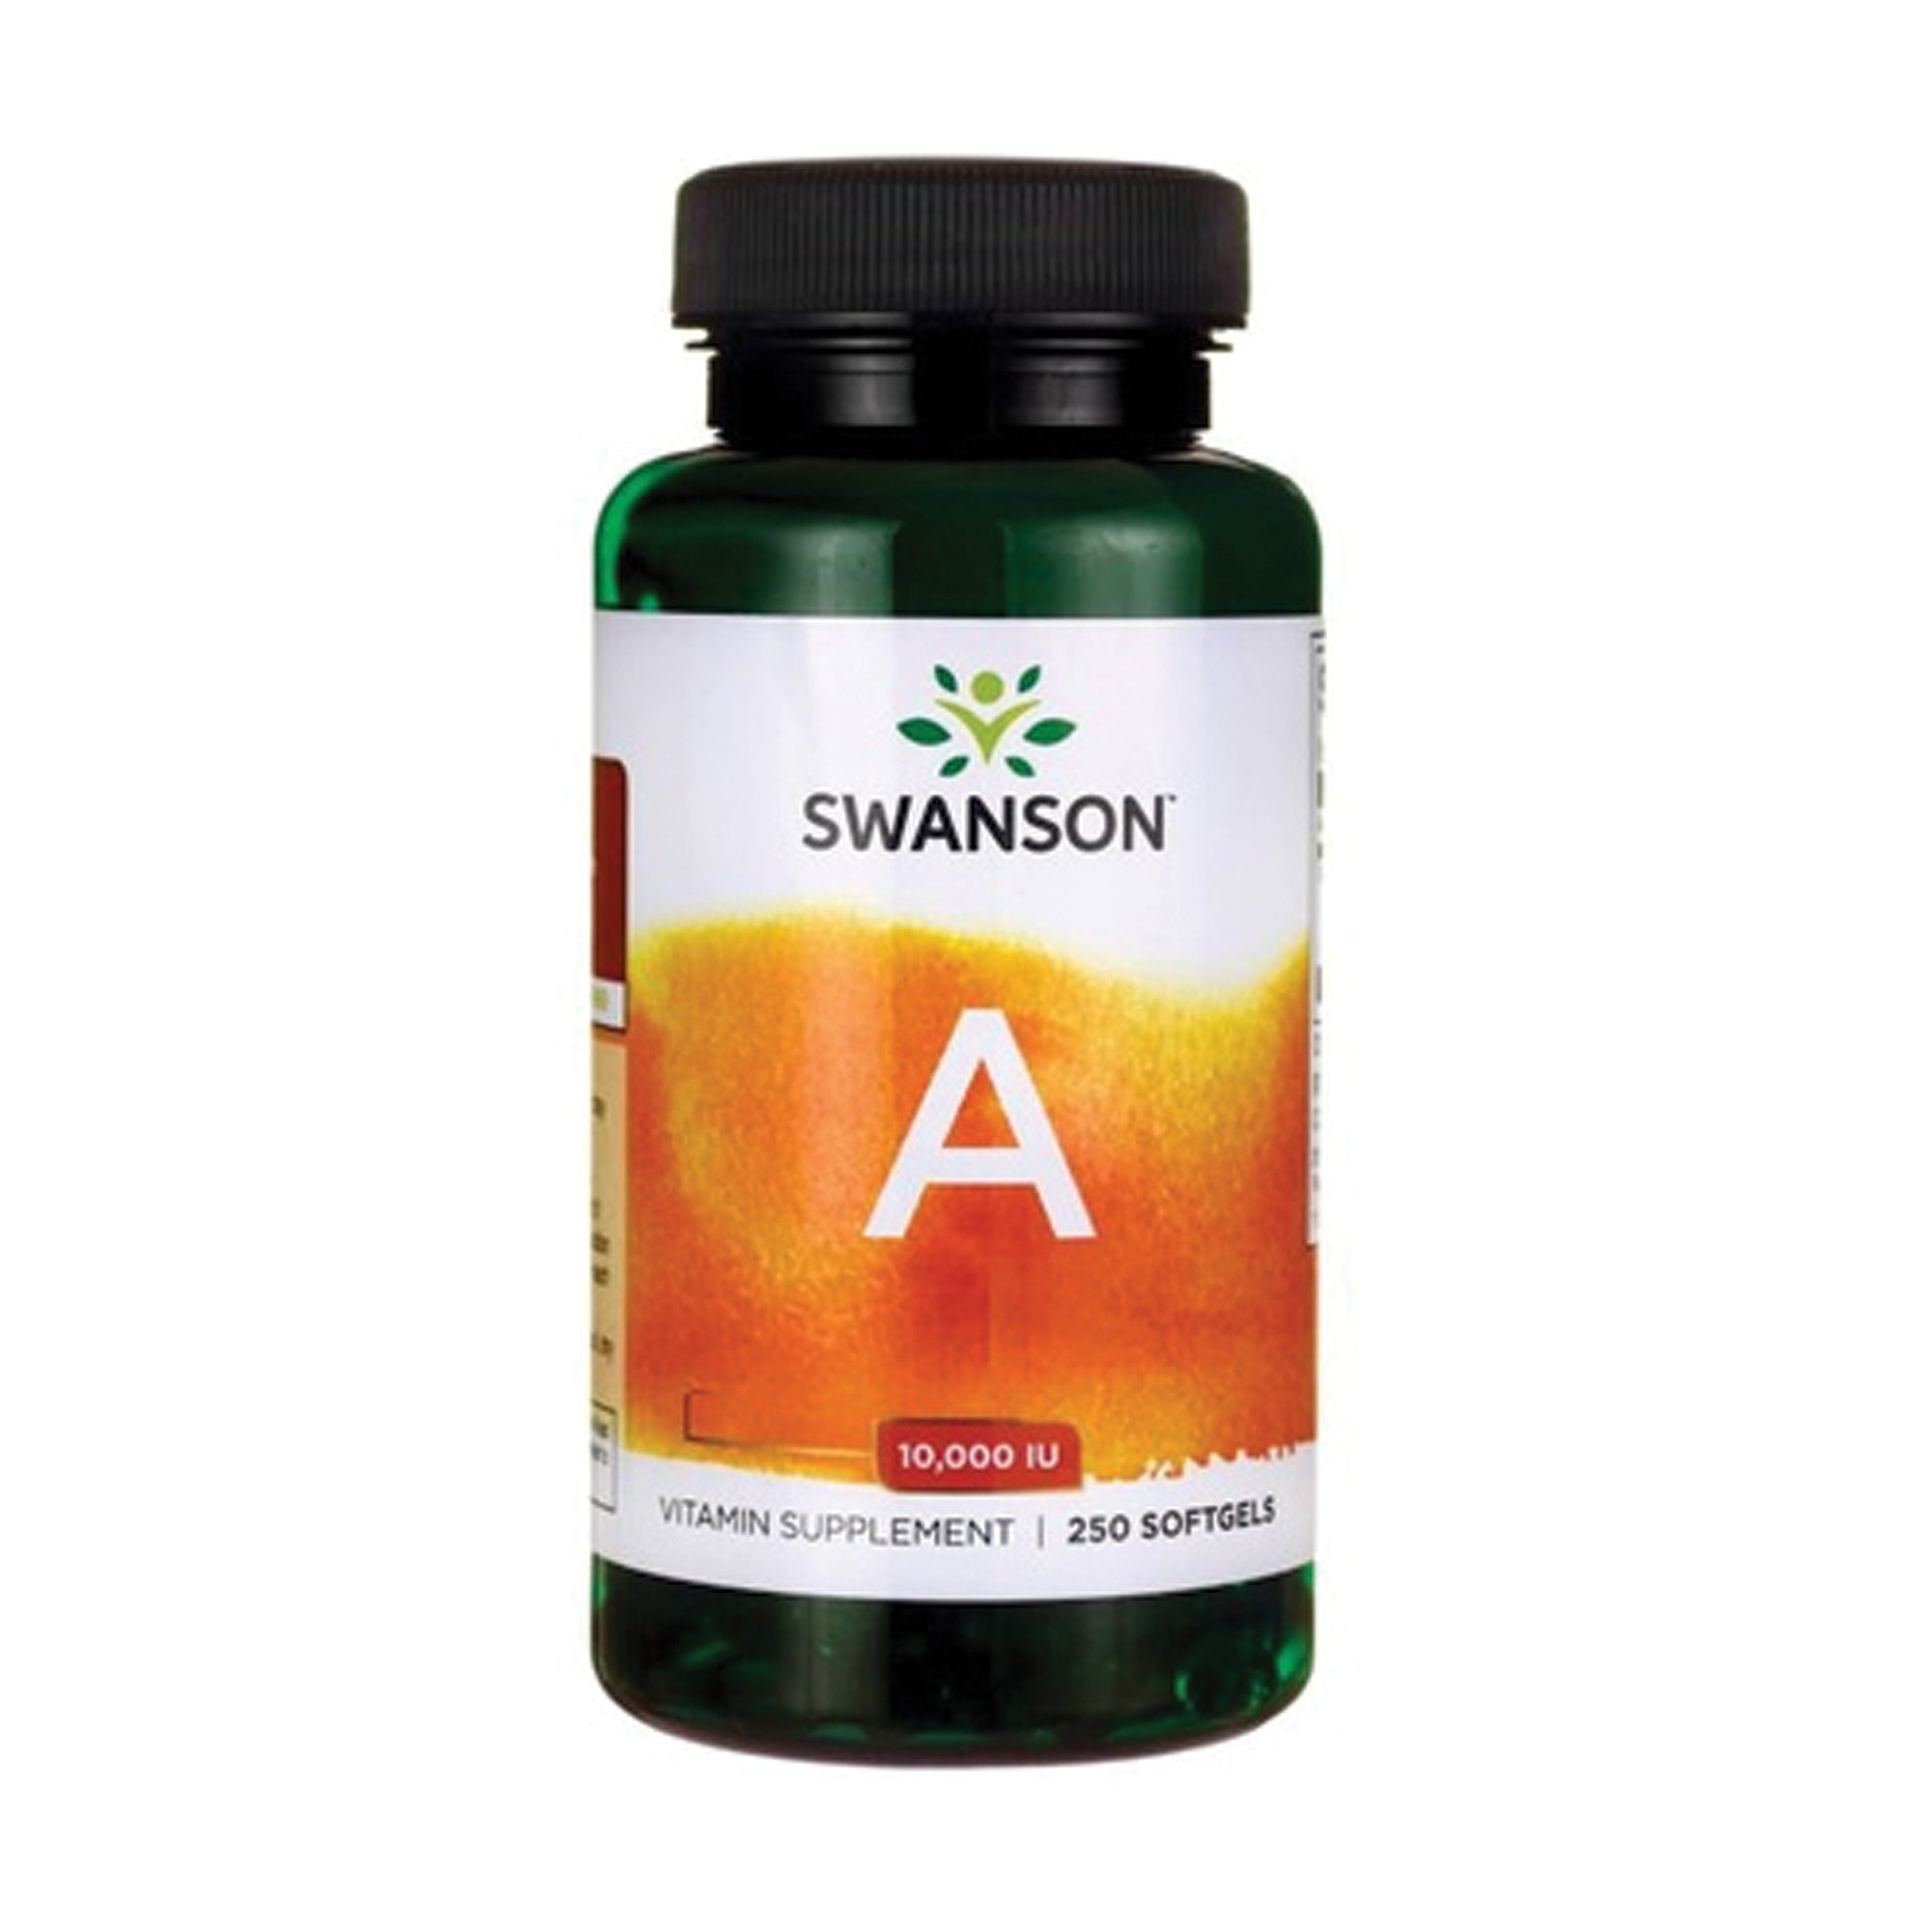 Swanson vitamine A 10.000 IE per softgel